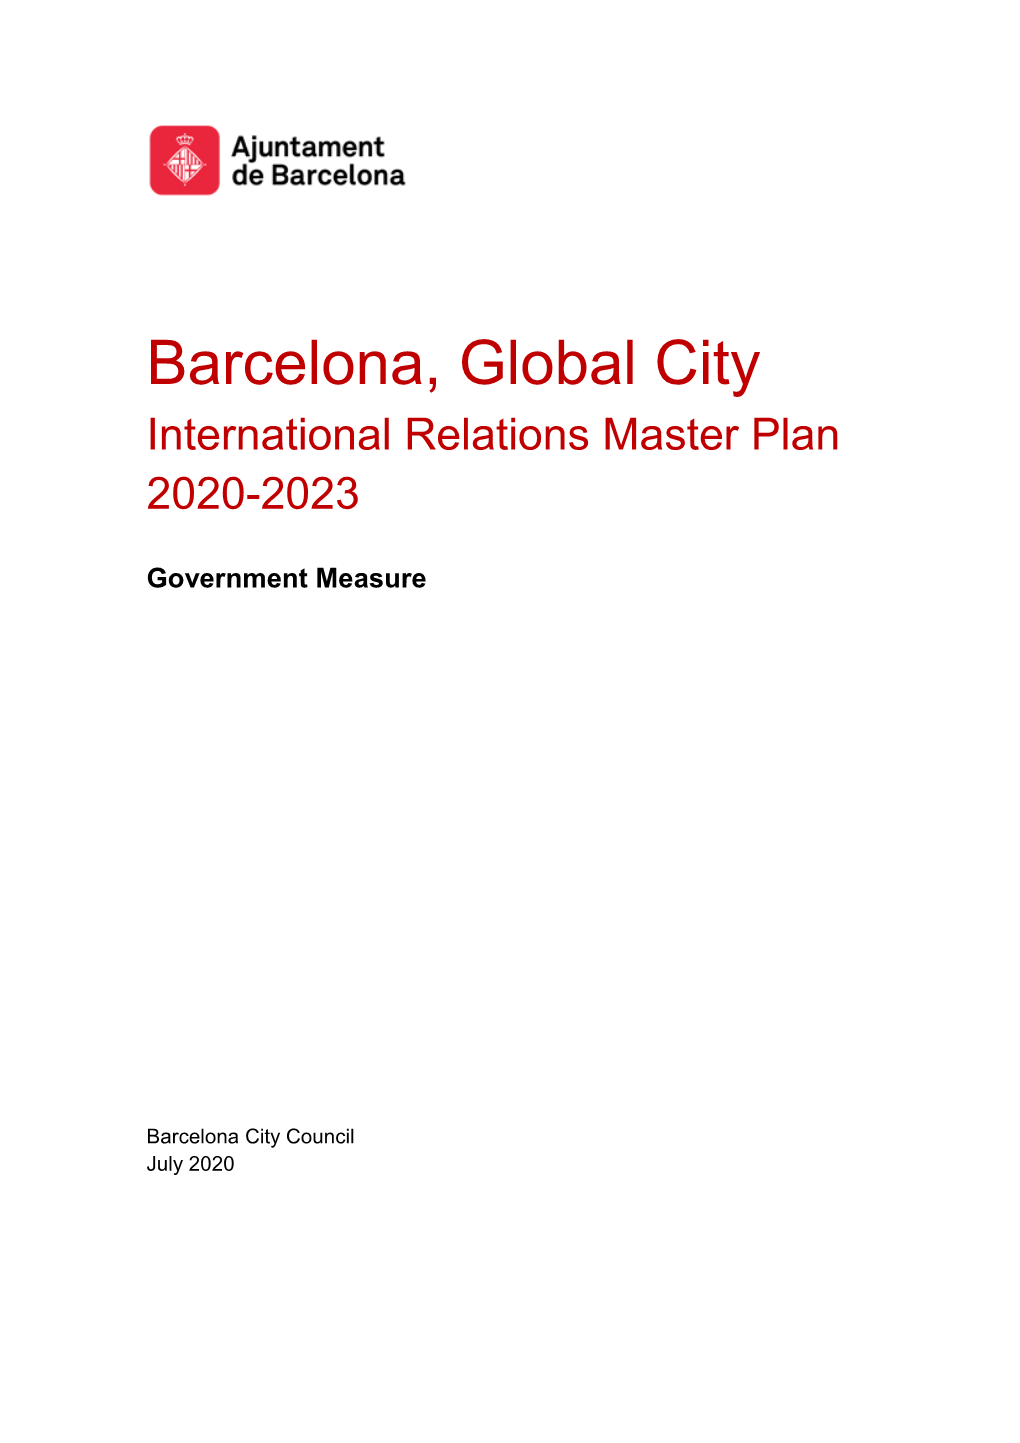 Barcelona, Global City International Relations Master Plan 2020-2023